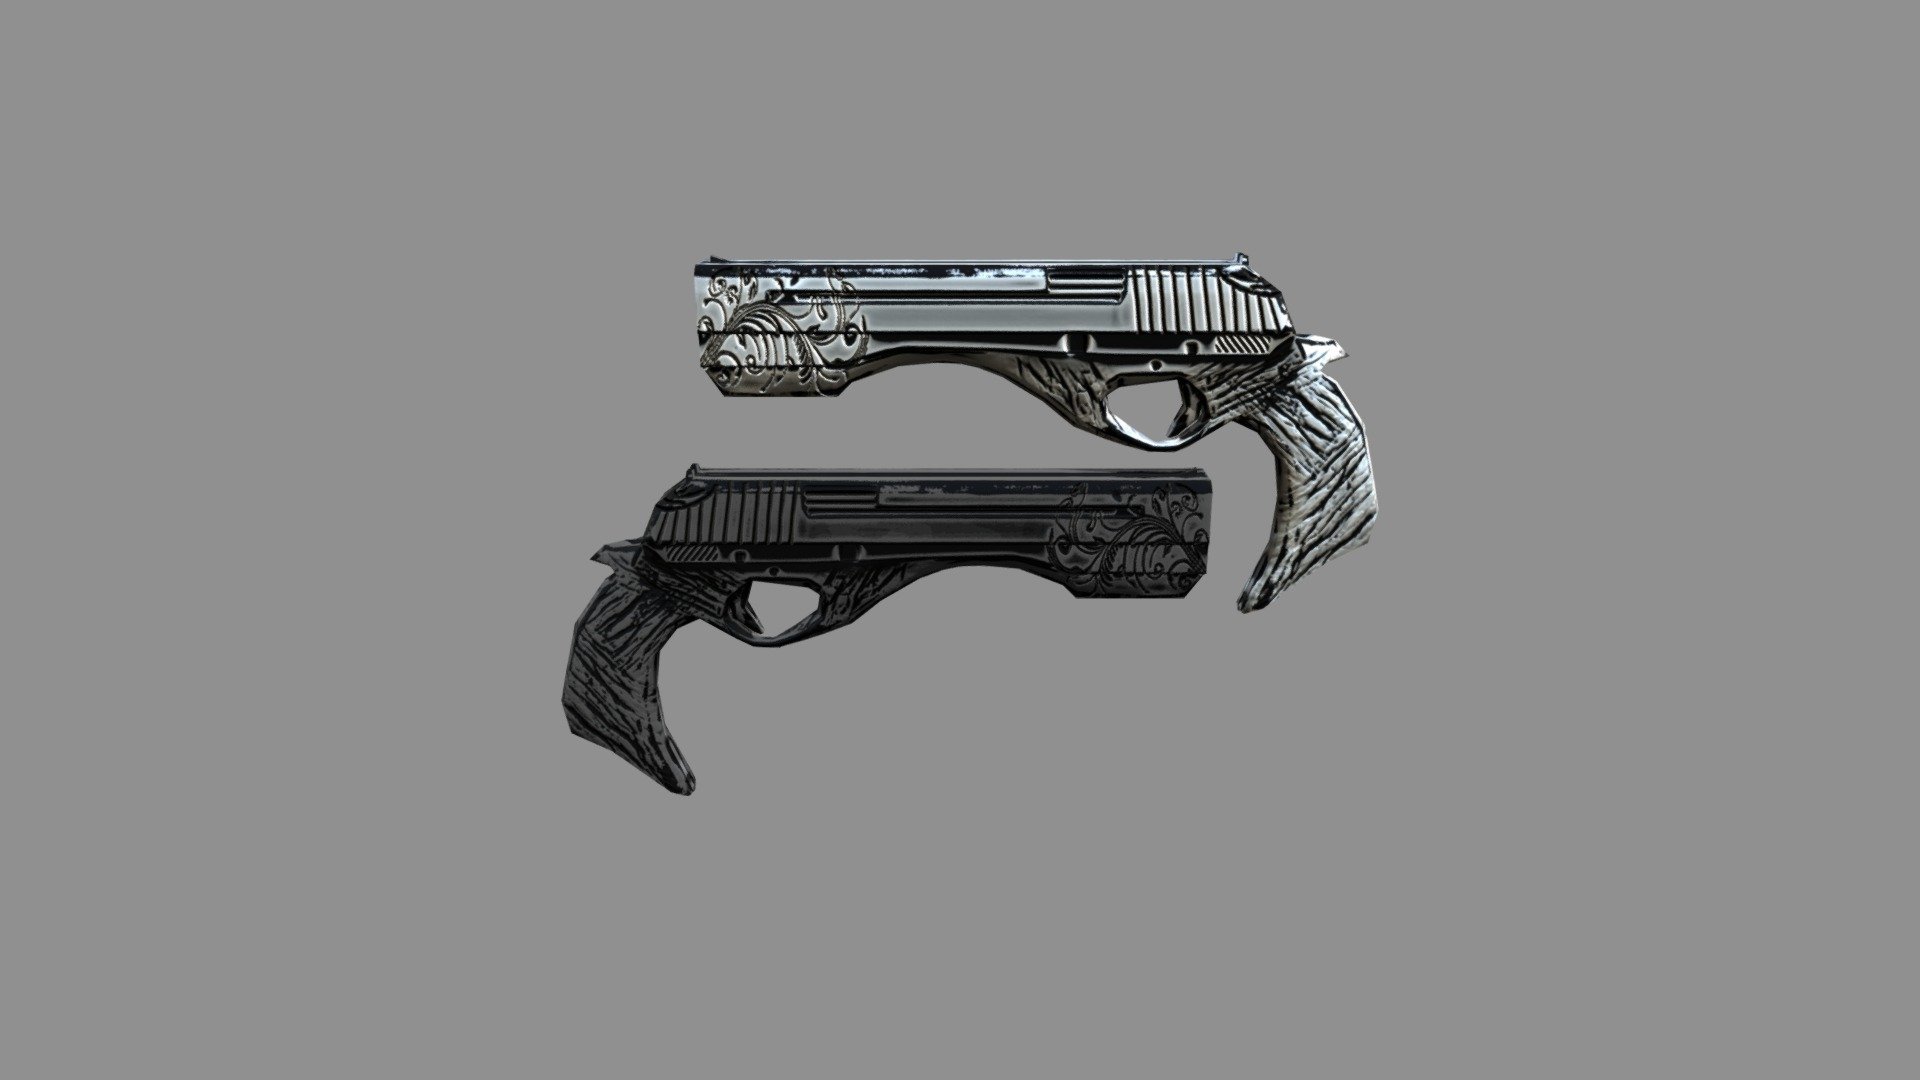 Double dante's gun from devil may cry - Dante's Guns - 3D model by capus.design 3d model